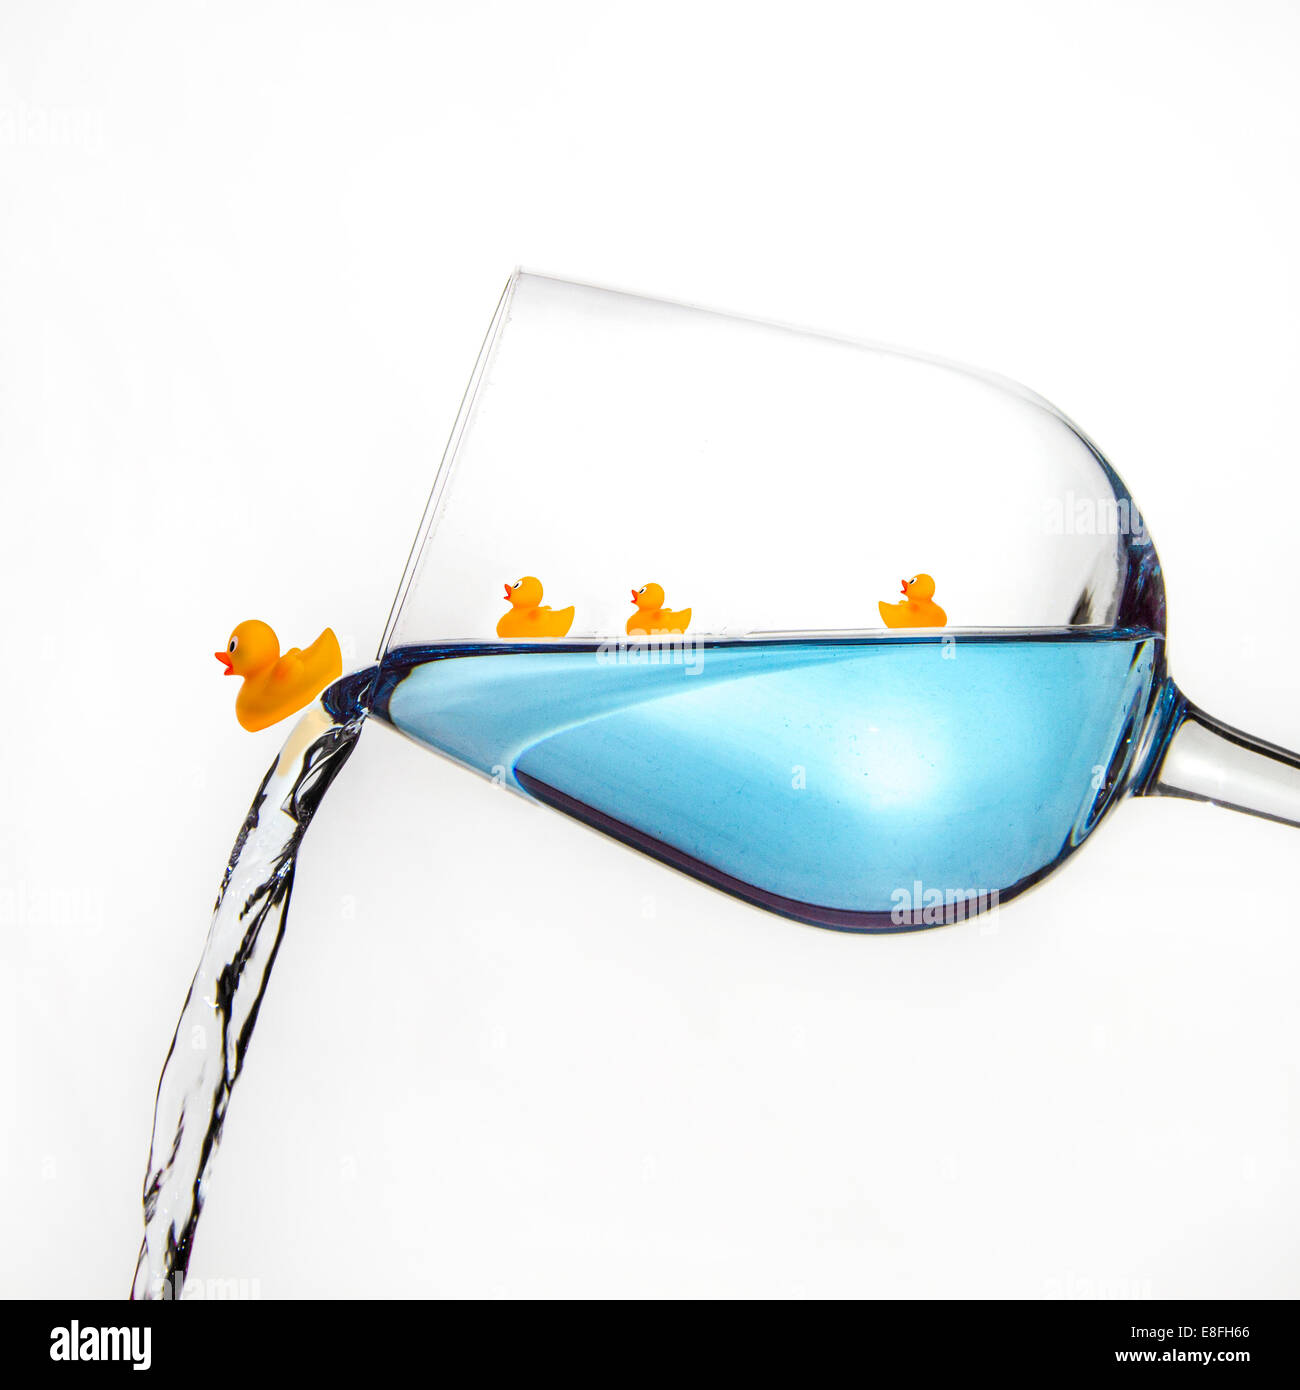 Rubber ducks in a wine glass Stock Photo